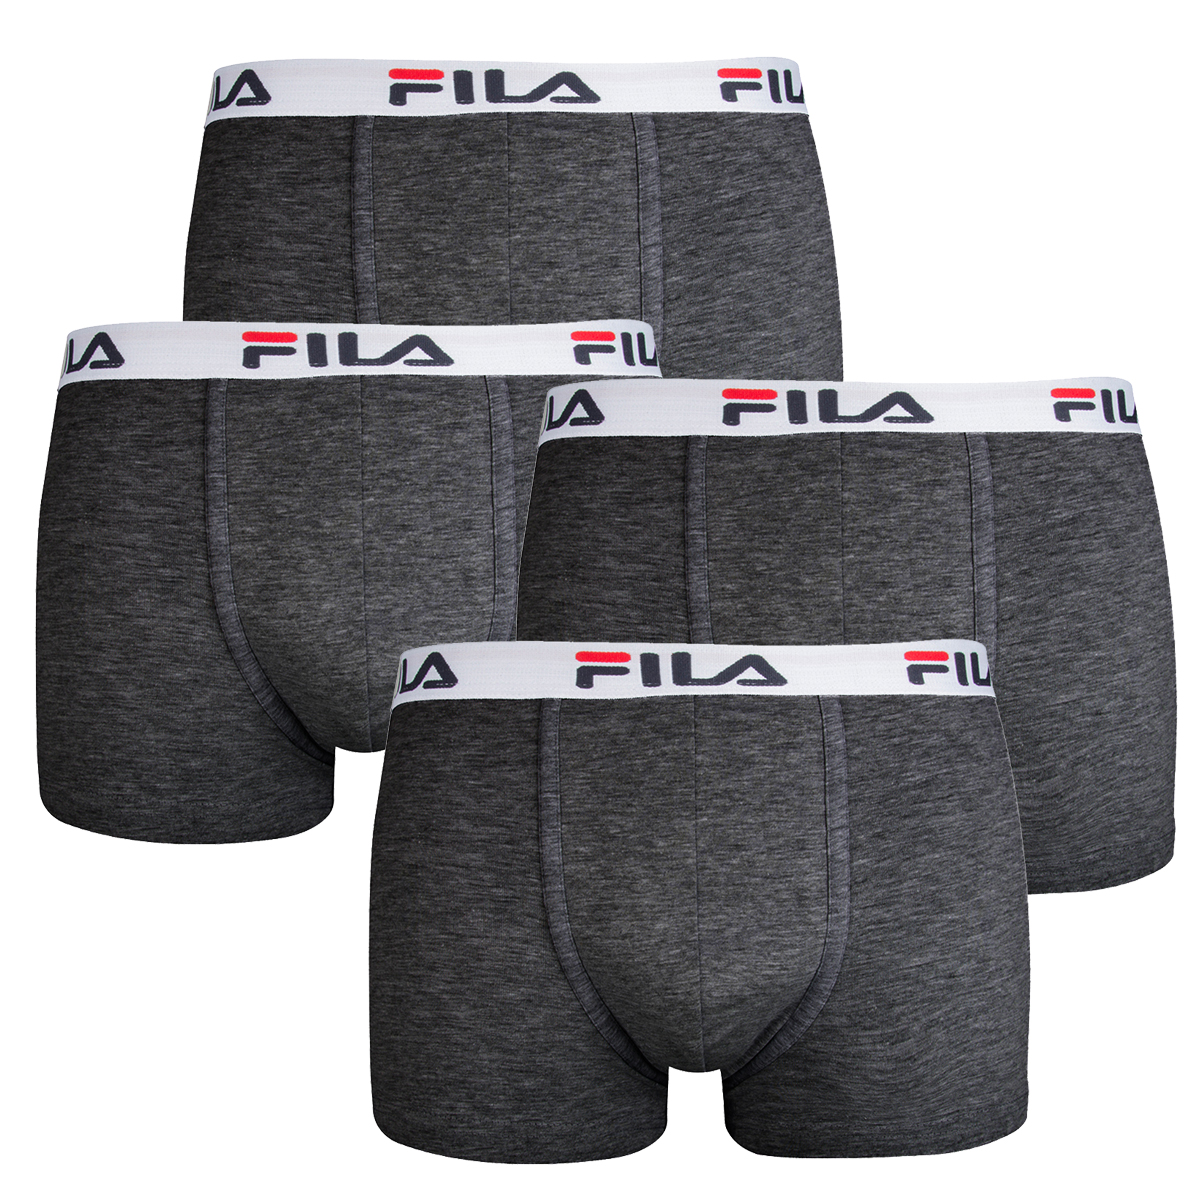 Fila Herren Boxershorts 8er Pack - Logo Pants Cotton Stretch - Enganliegend - Bequem - Farbenauswahl (Anthrazit Melange, M - 8 Pack)